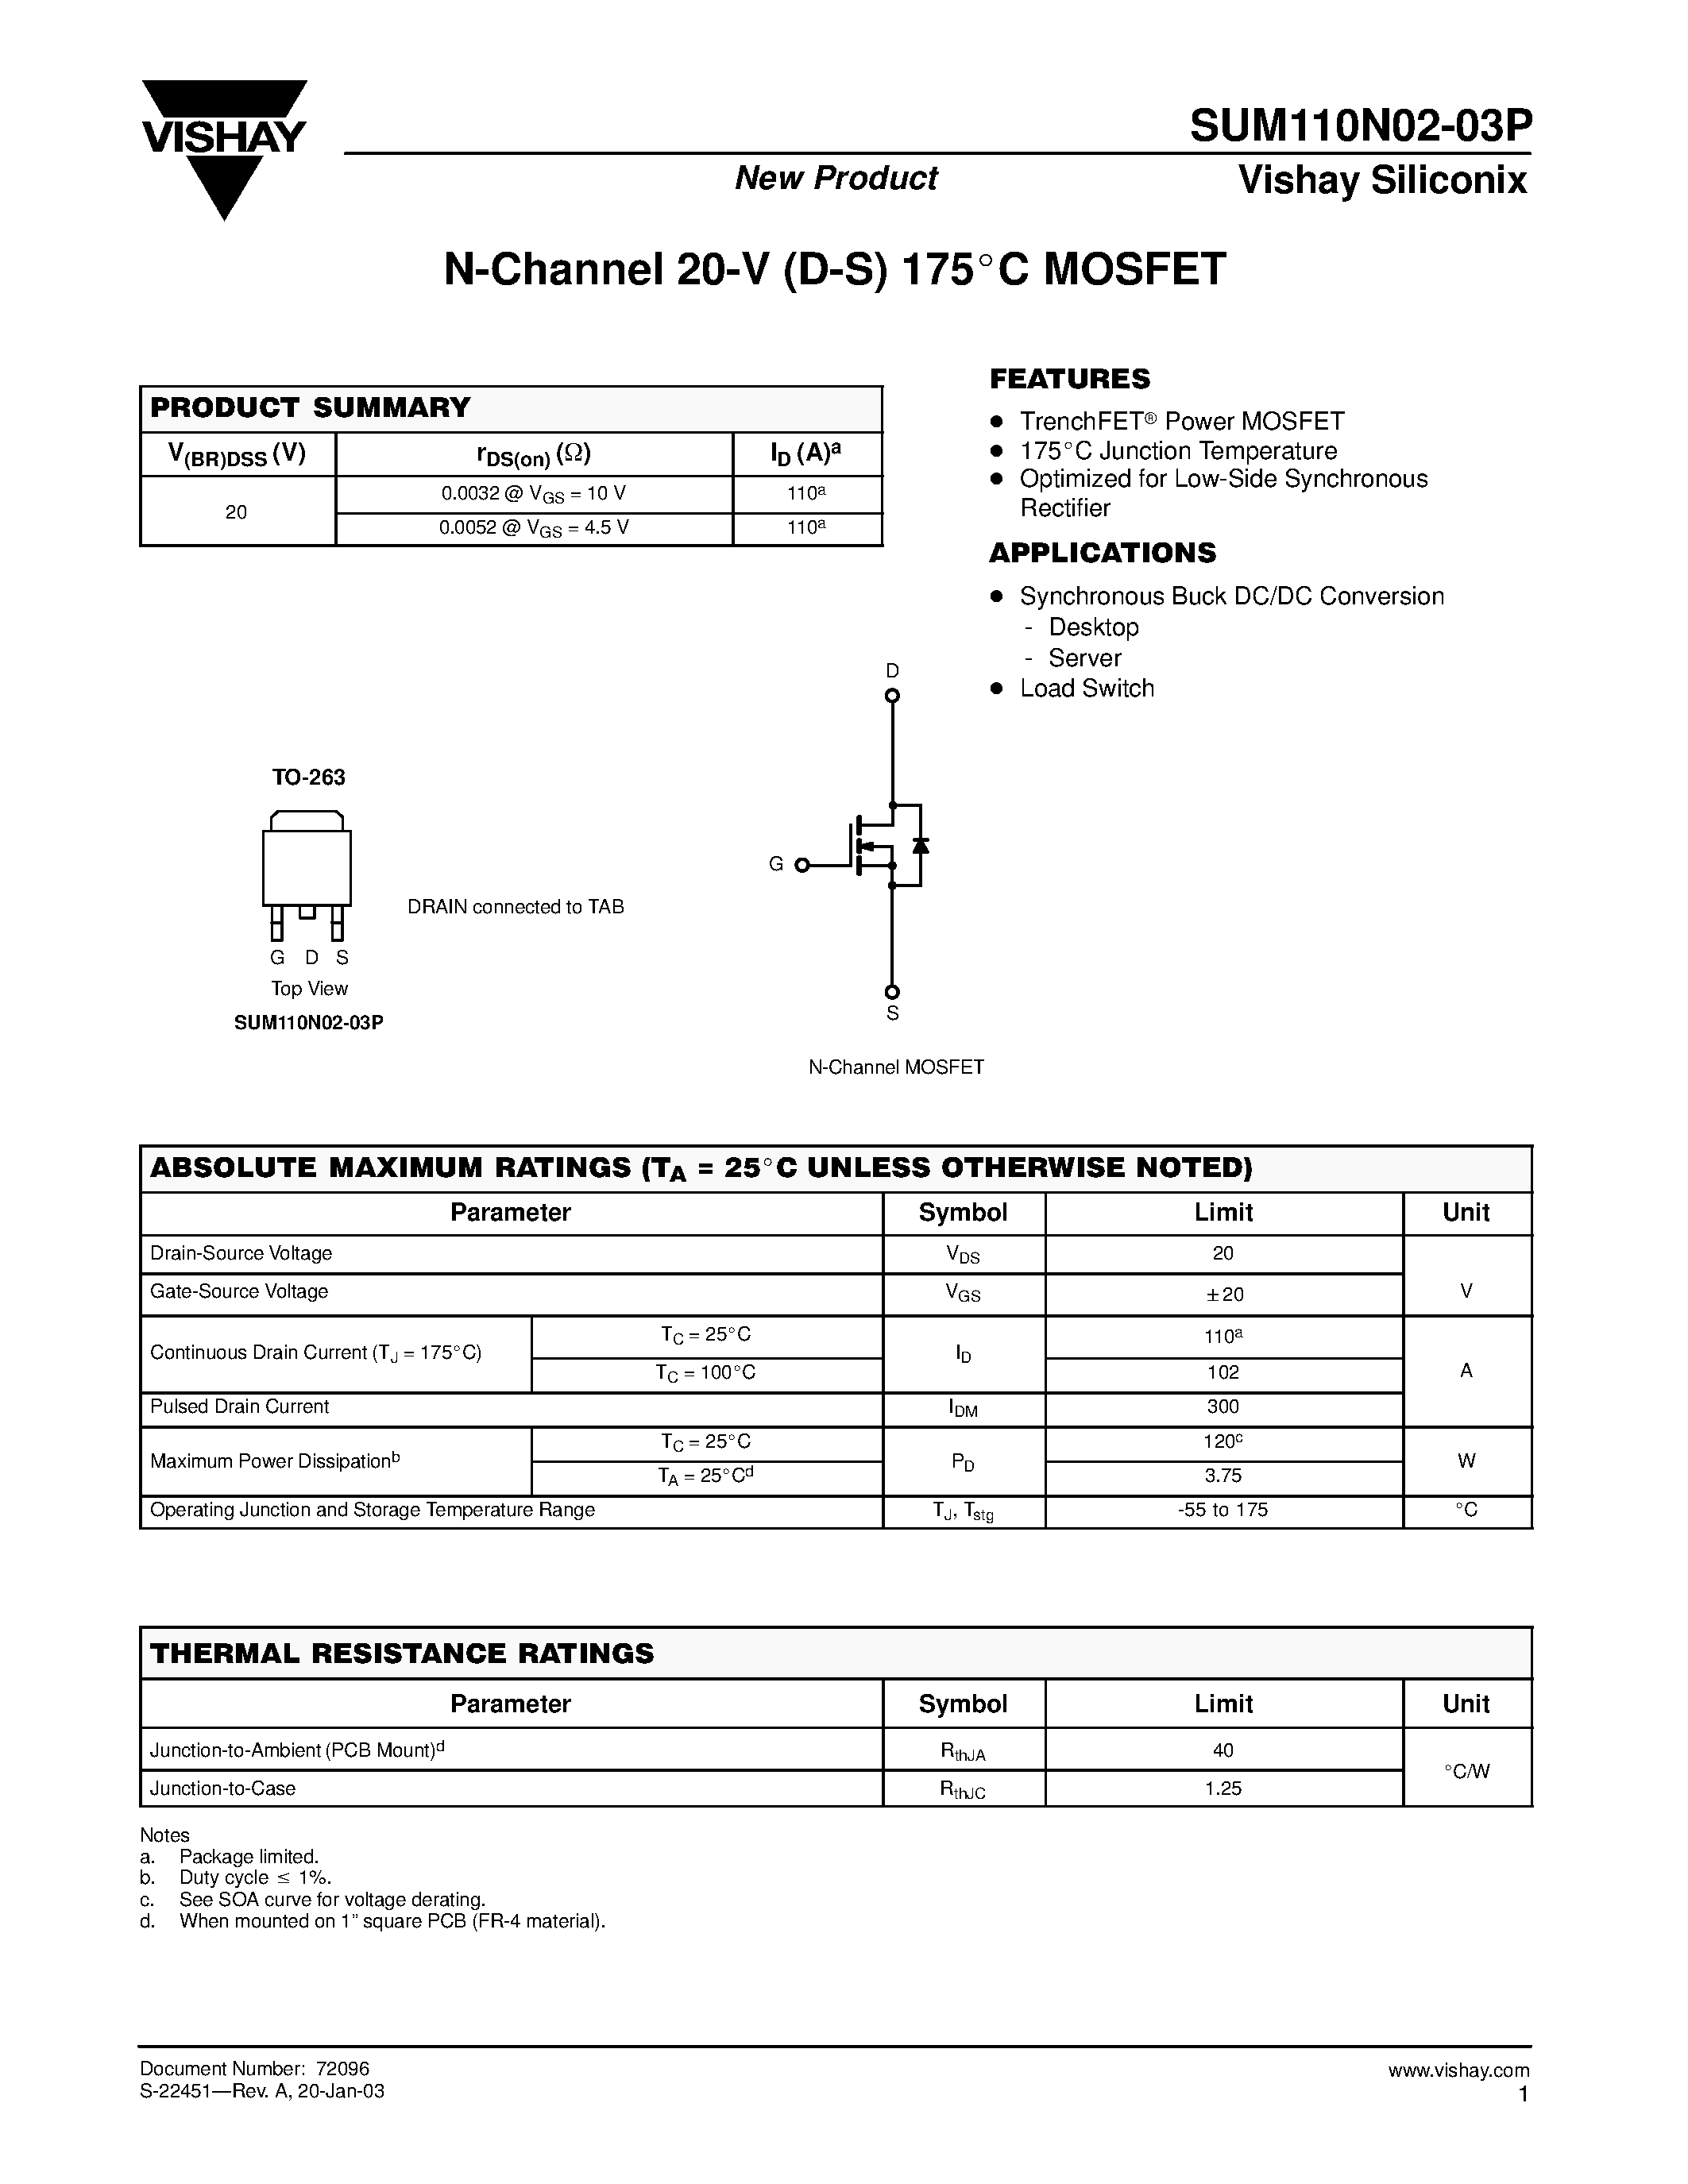 Даташит SUM110N02-03P - N-Channel 20-V (D-S) 175 C MOSFET страница 1